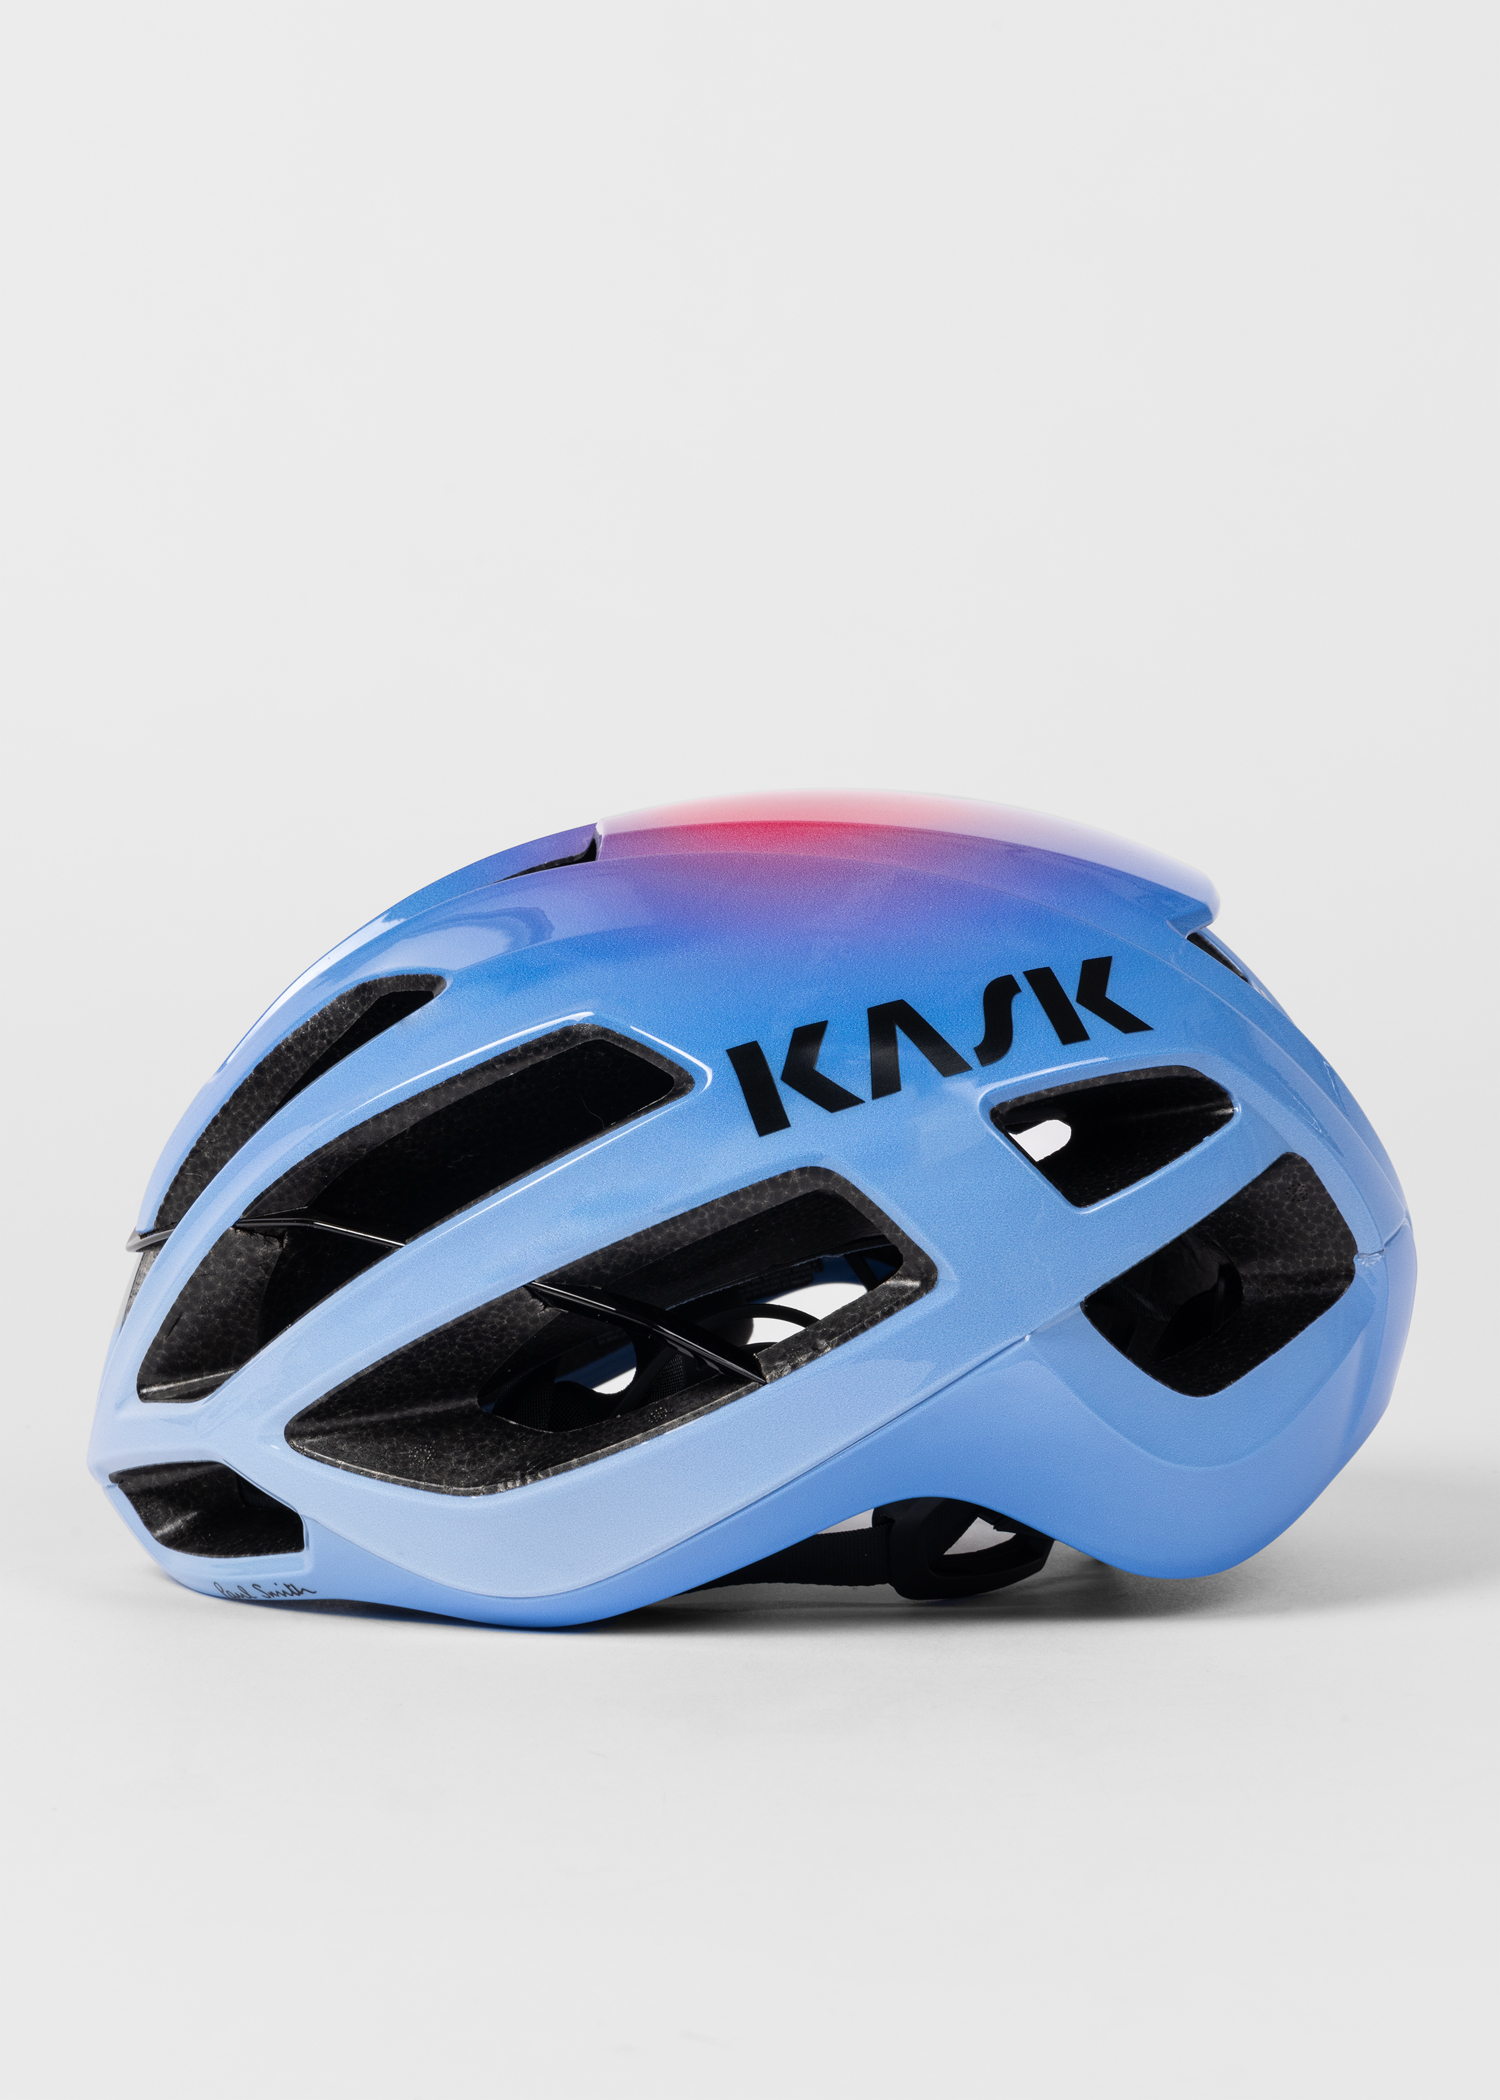 Paul Smith + Kask 'Ombré Blue' Protone Cycling Helmet